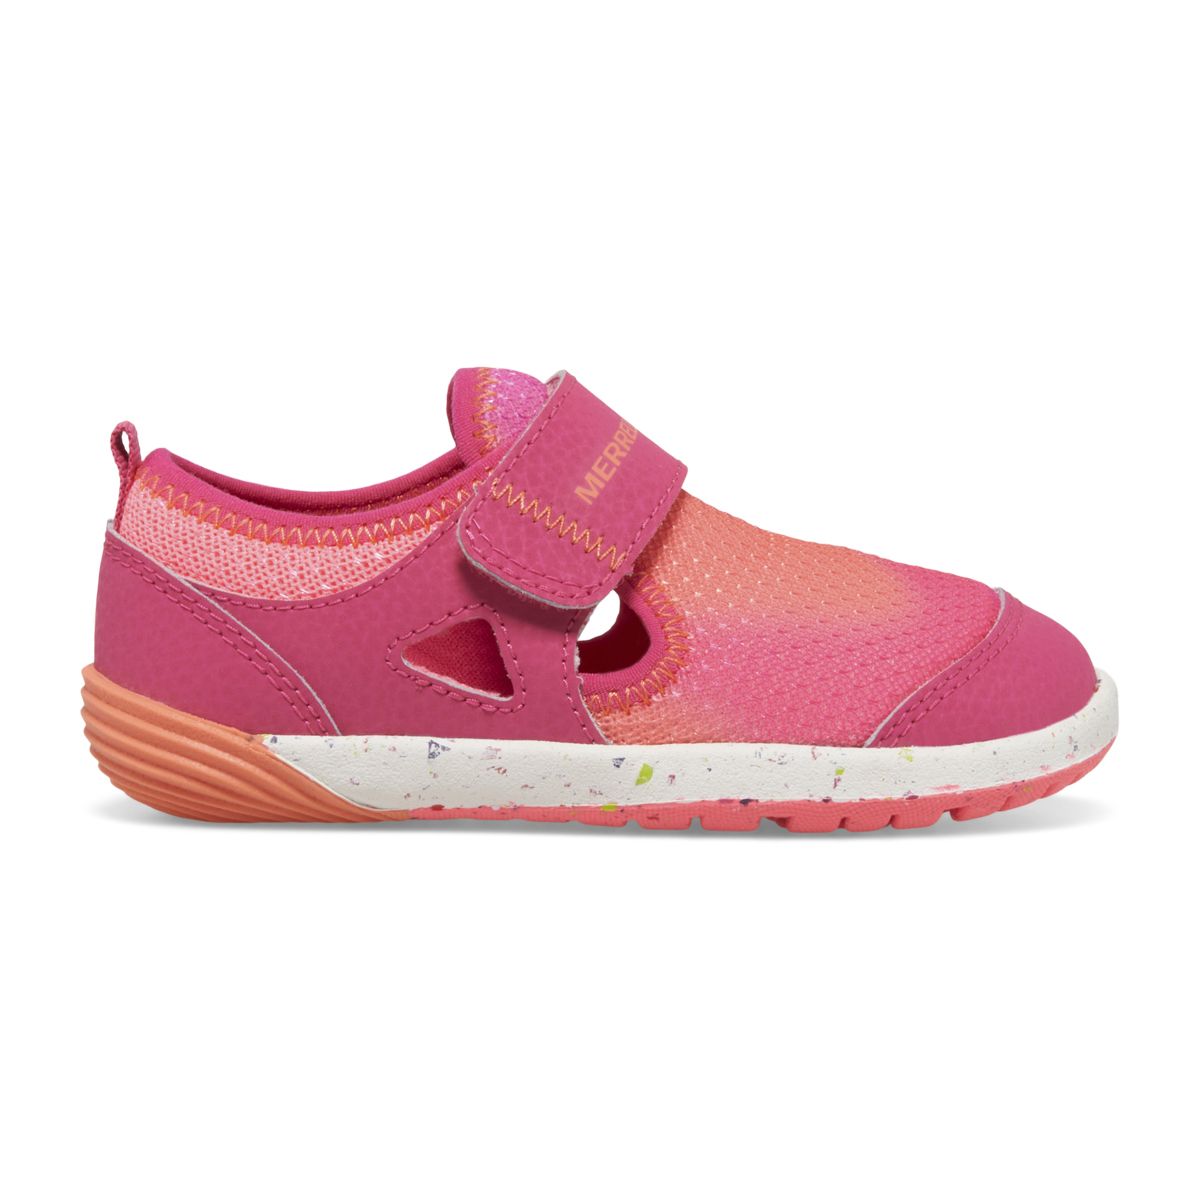 Shop Kids Bare Steps Shoe Collection | Merrell